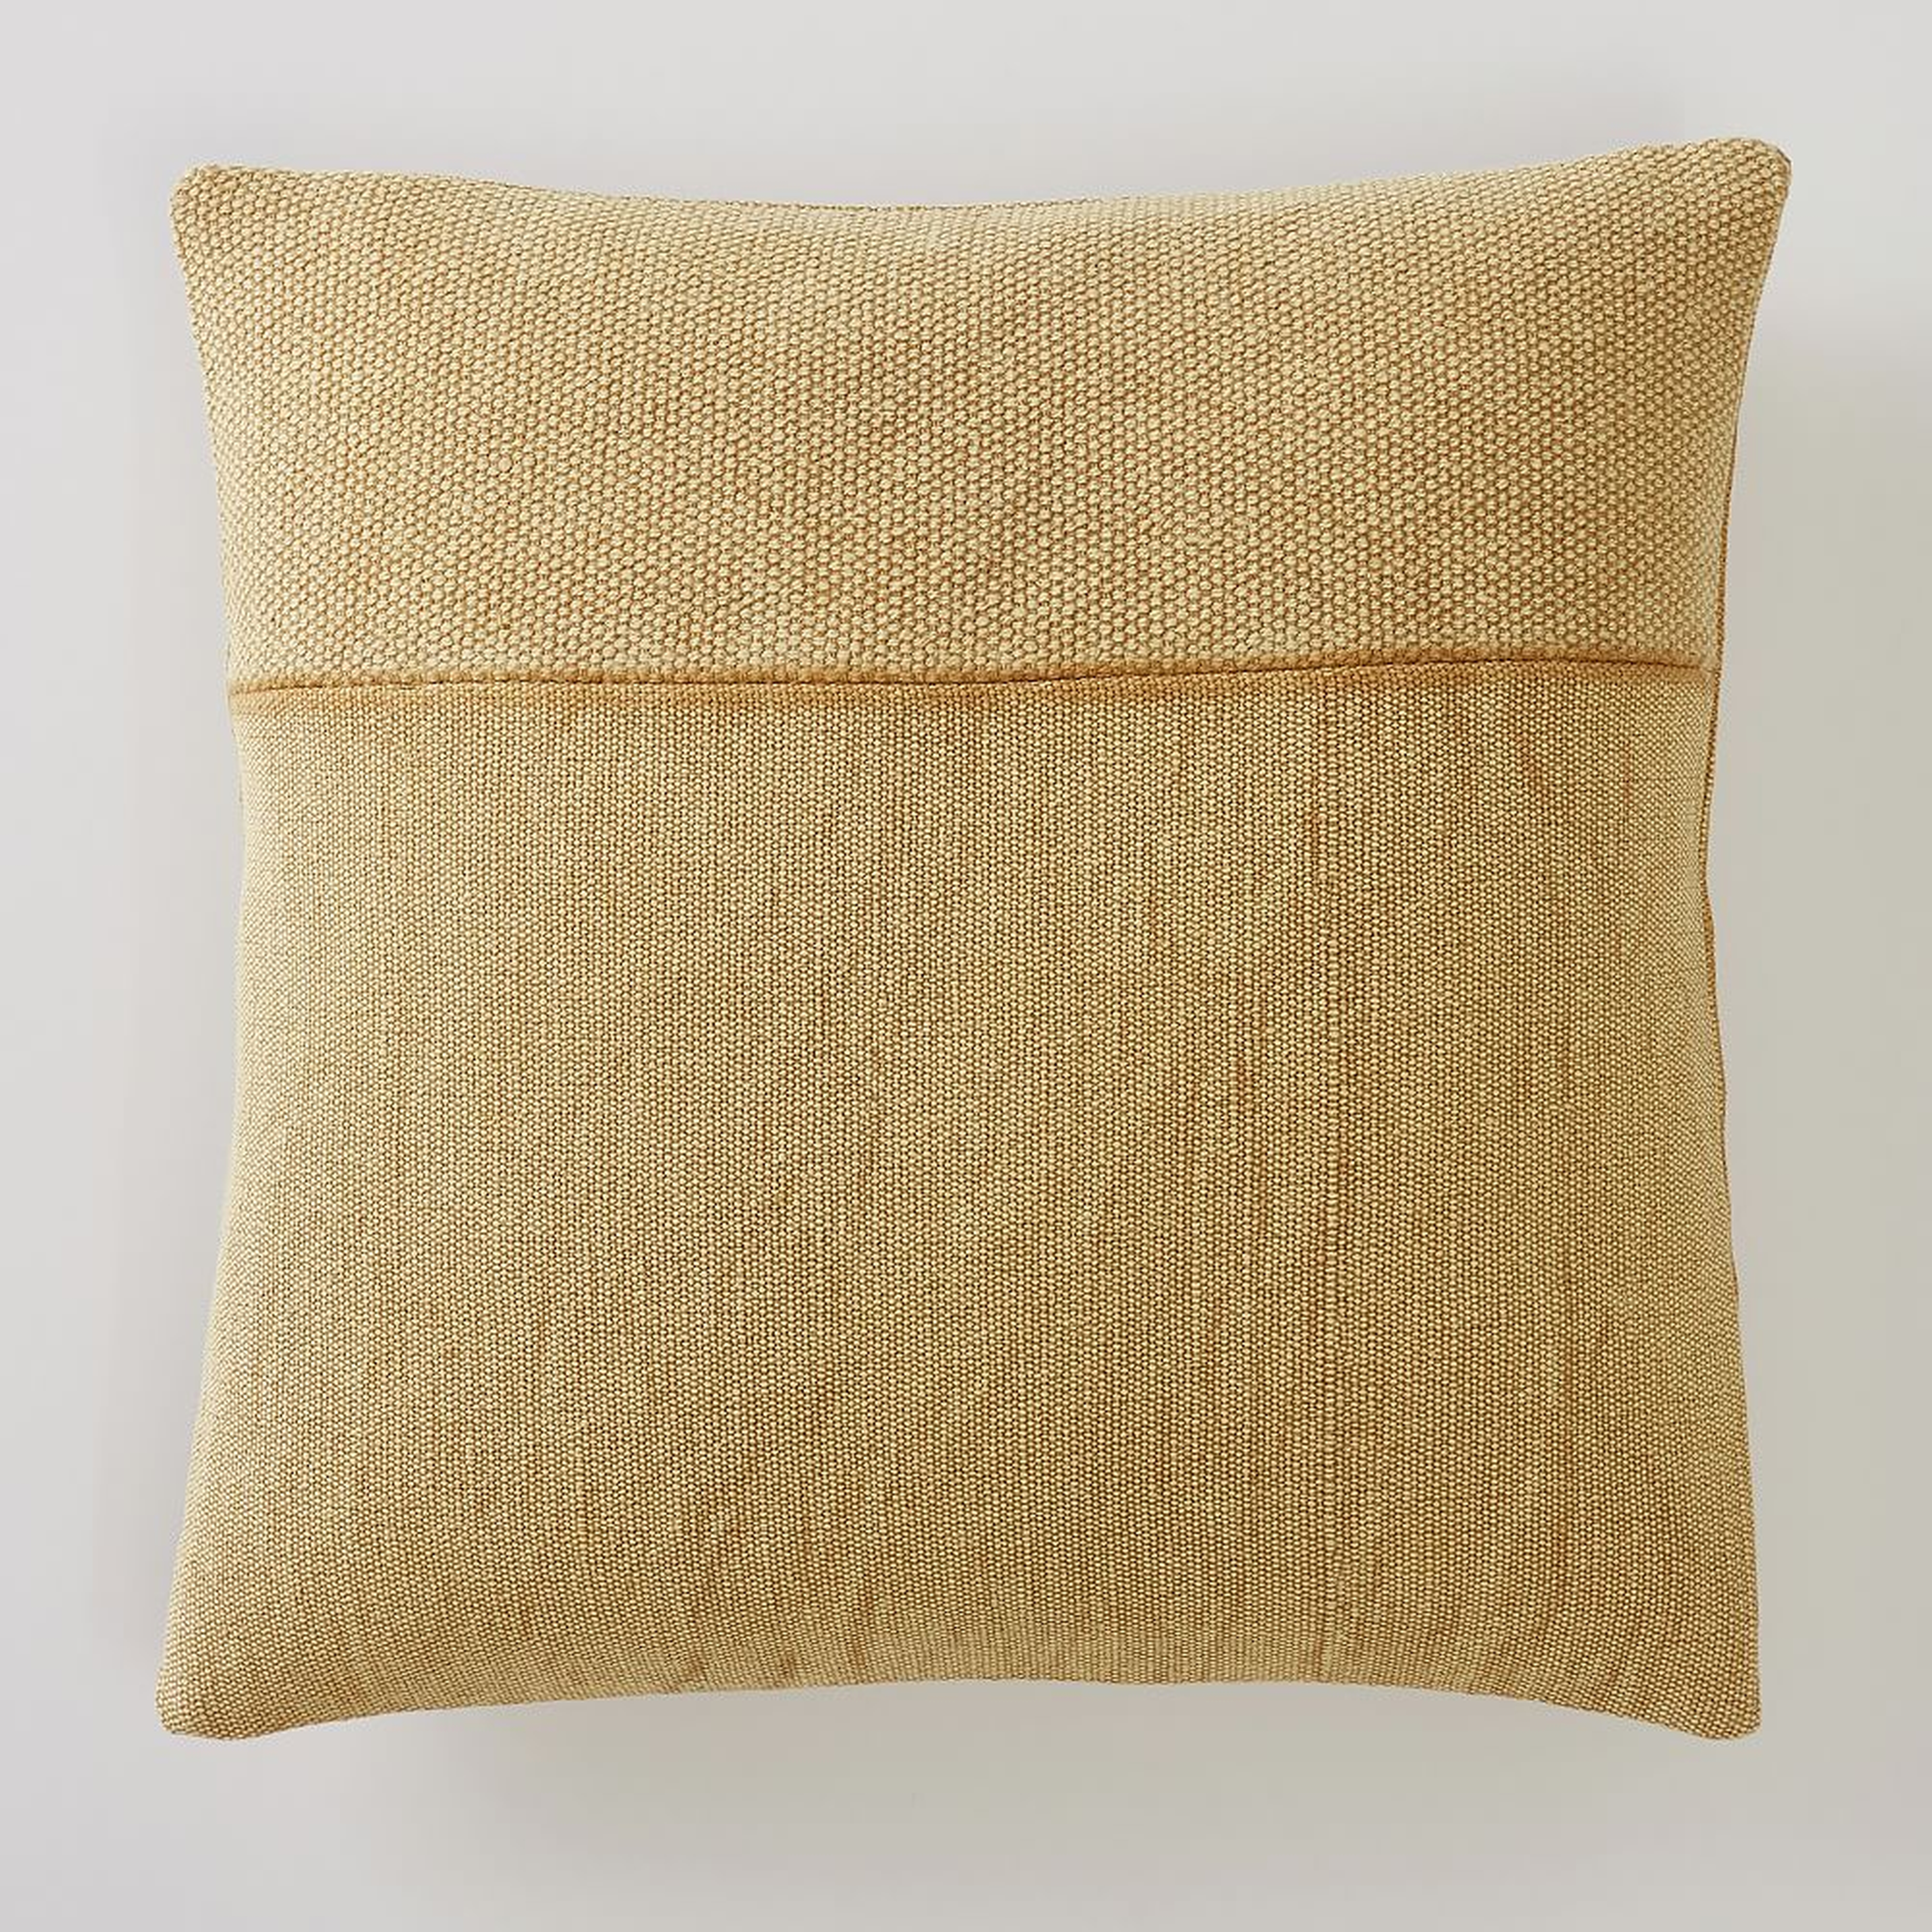 we x pbteen Cotton Canvas Pillow Cover, 18x18, Horseradish - Pottery Barn Teen